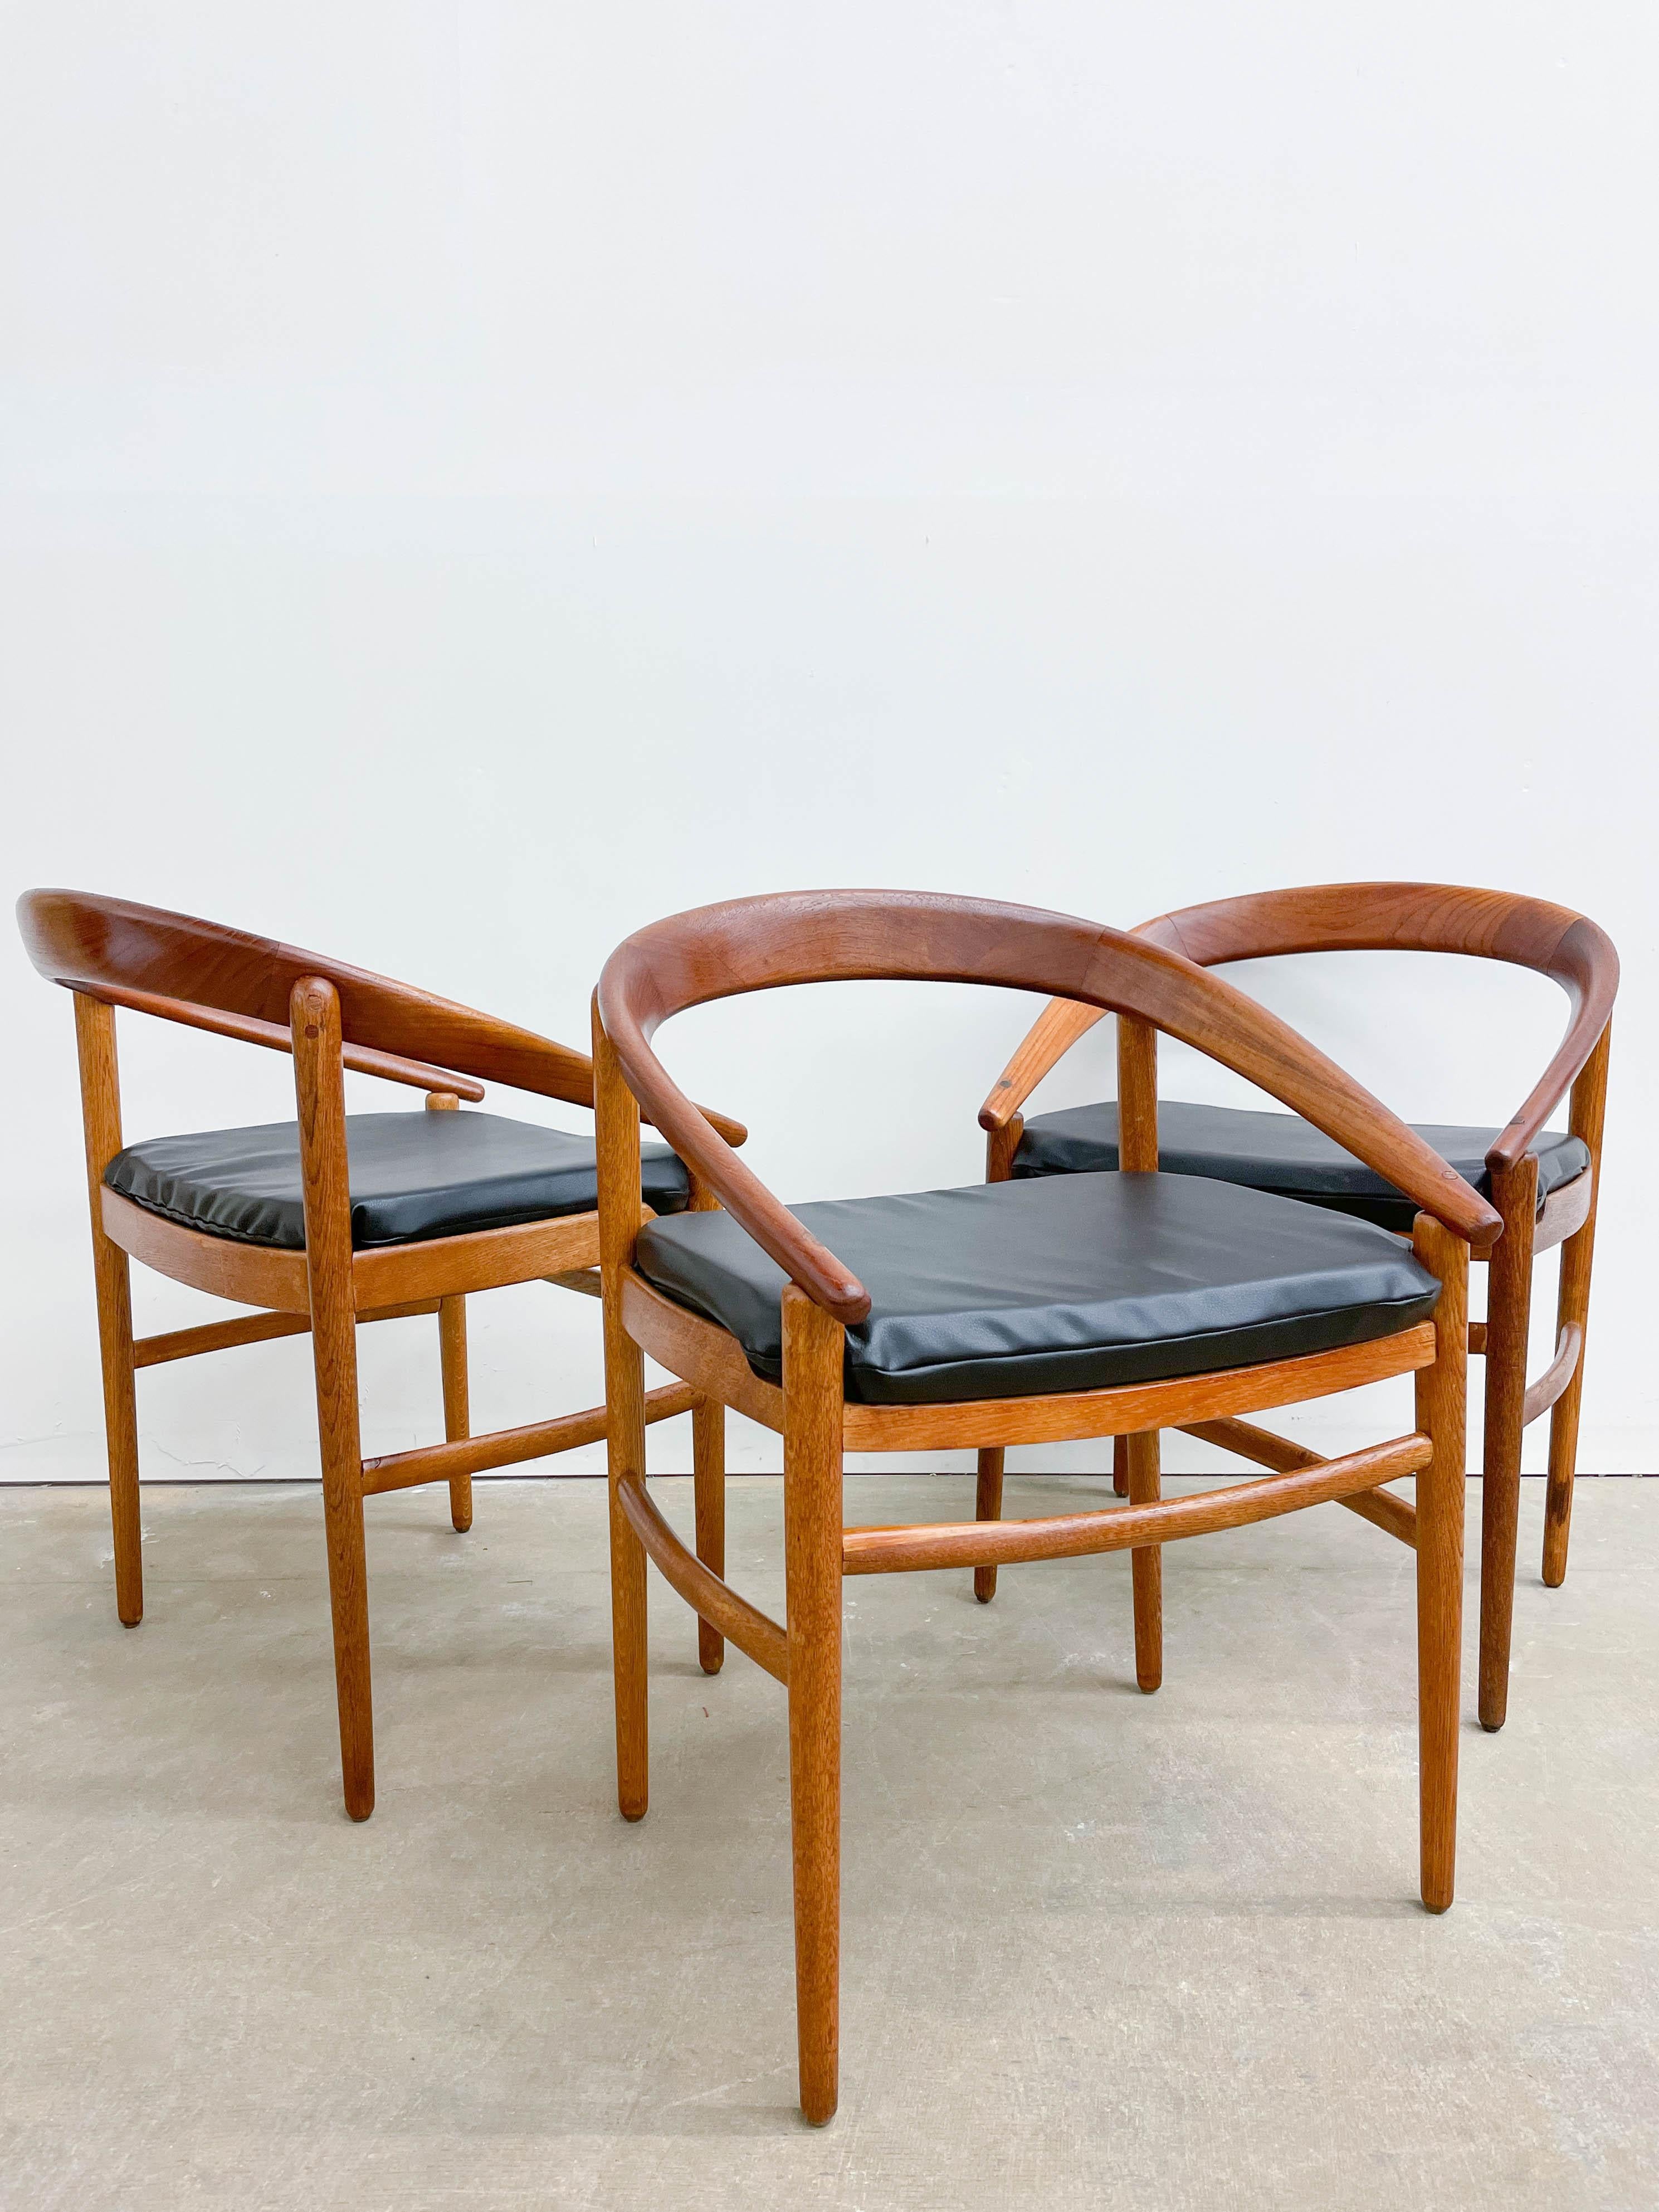 Brockmann Petersen Danish Modern Dining Chairs 1